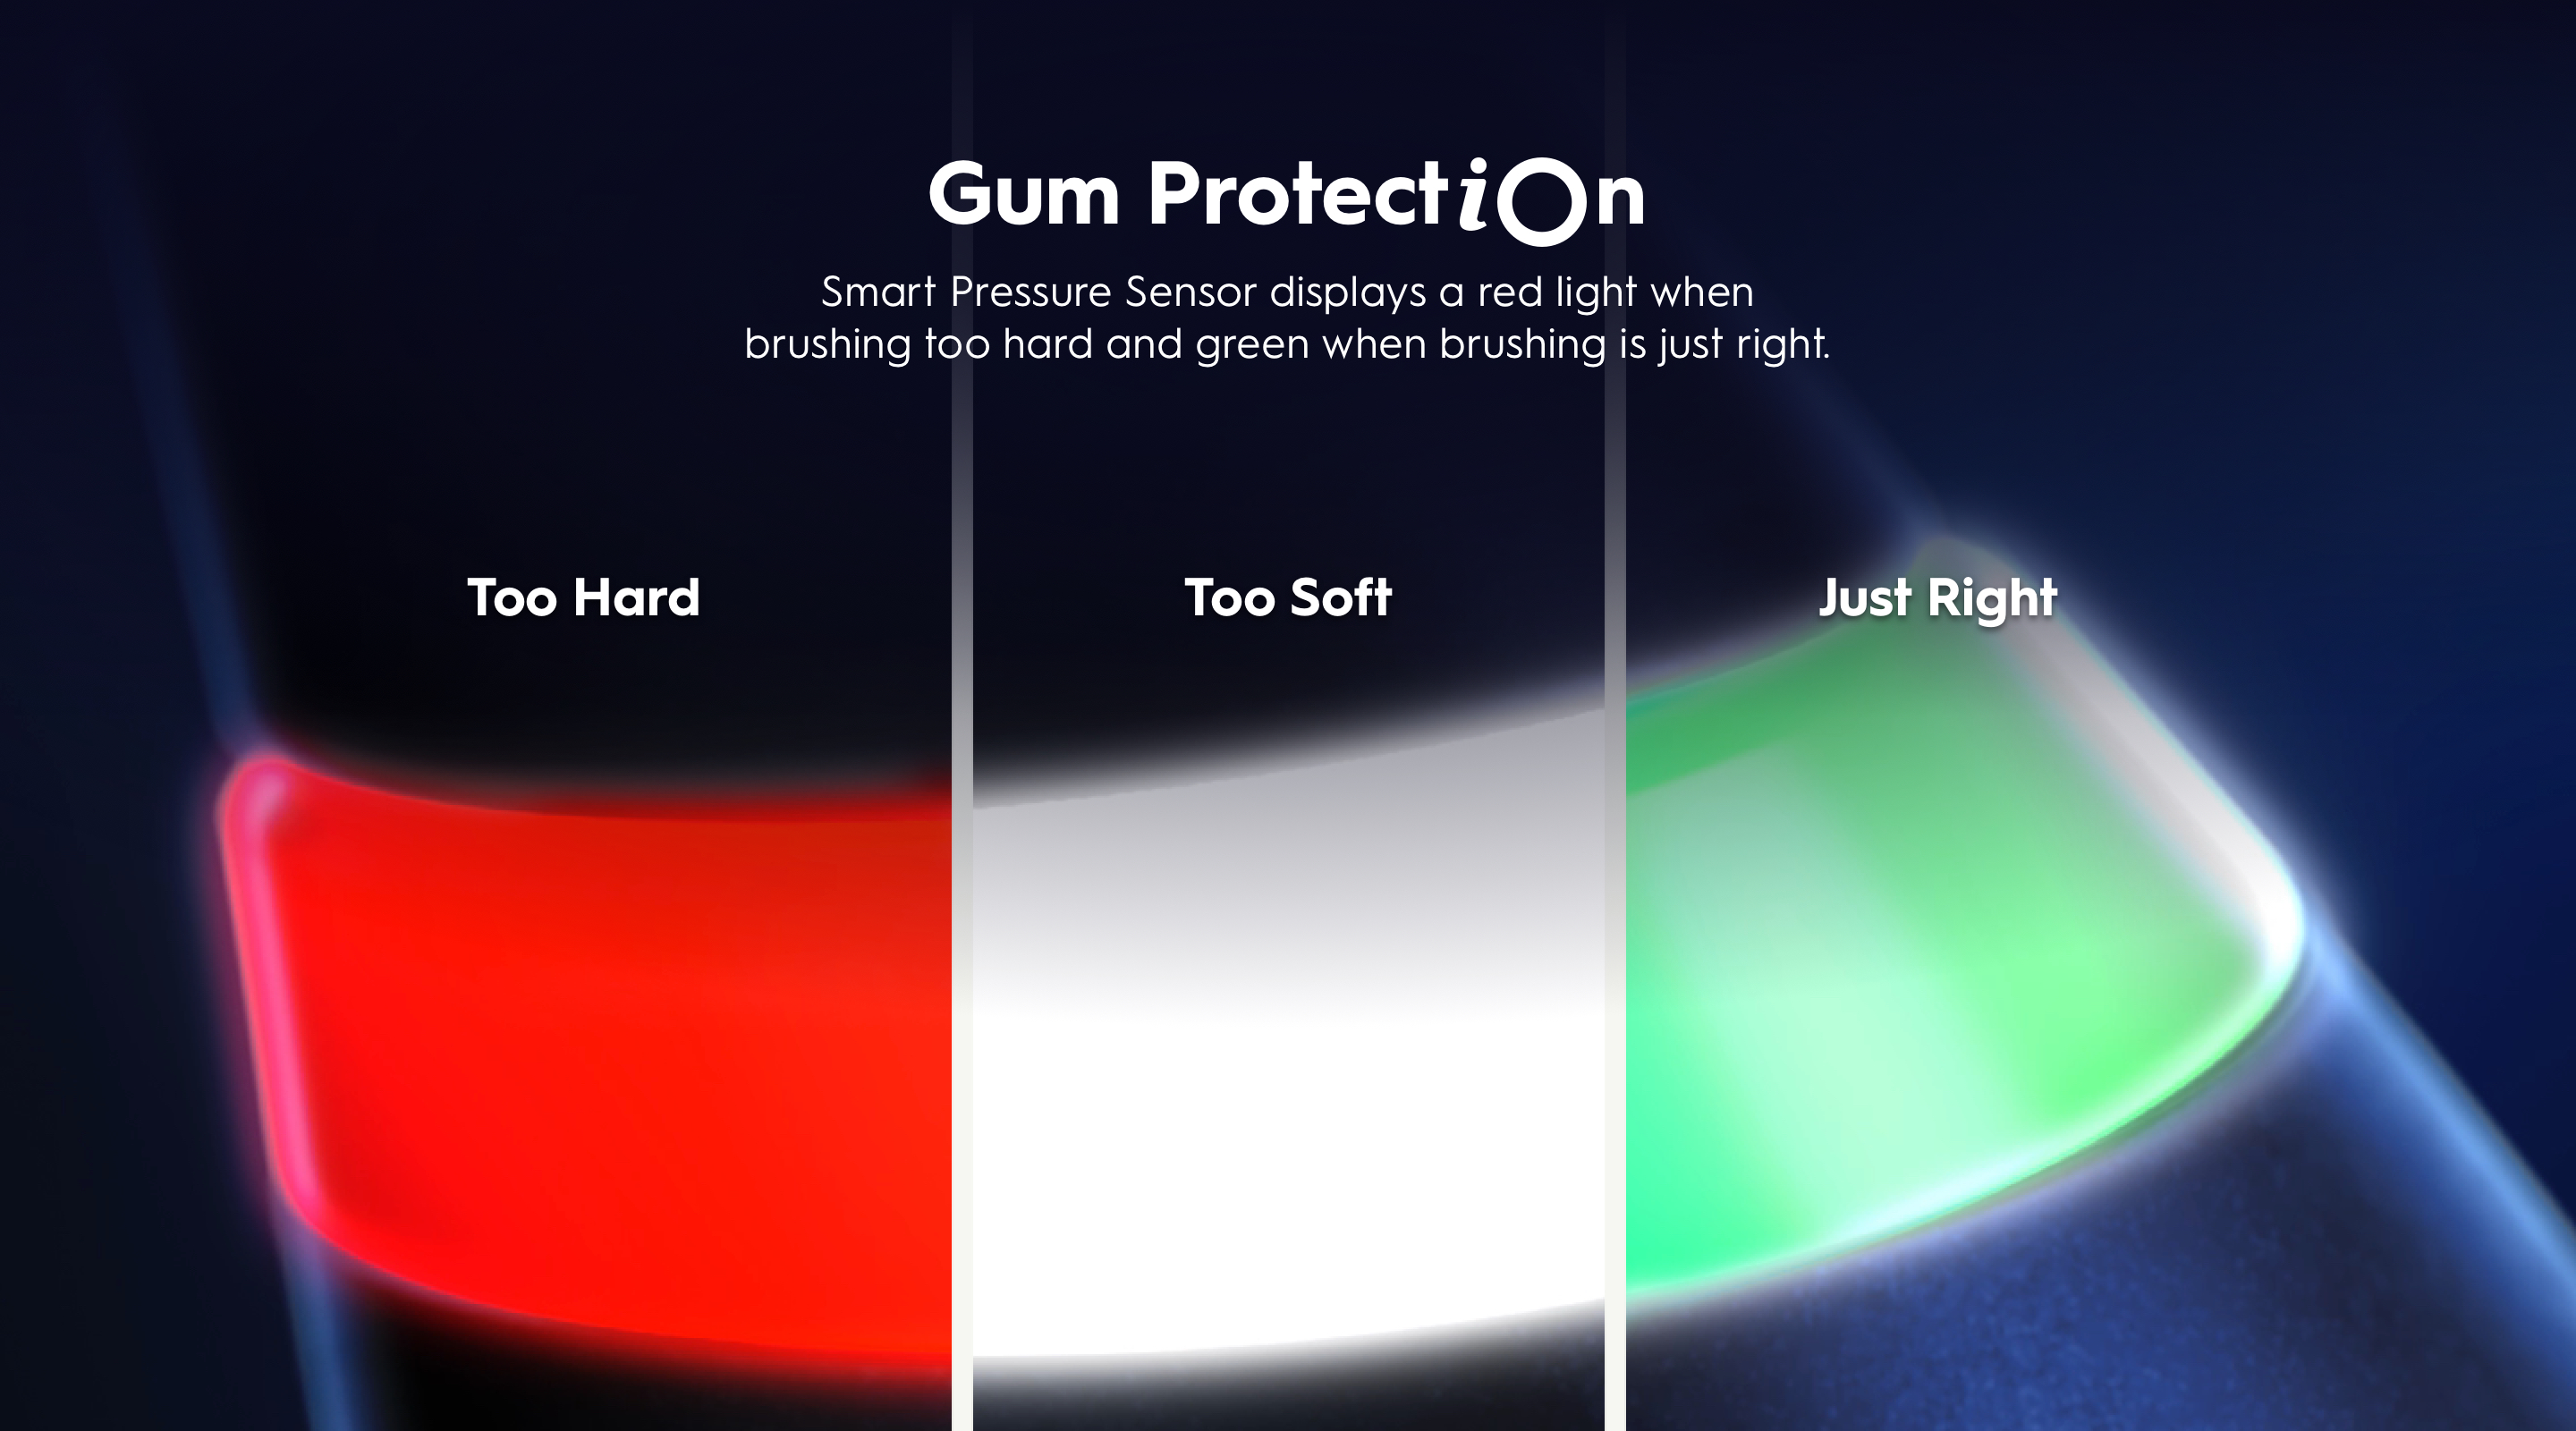 iO4 gum protection desktop